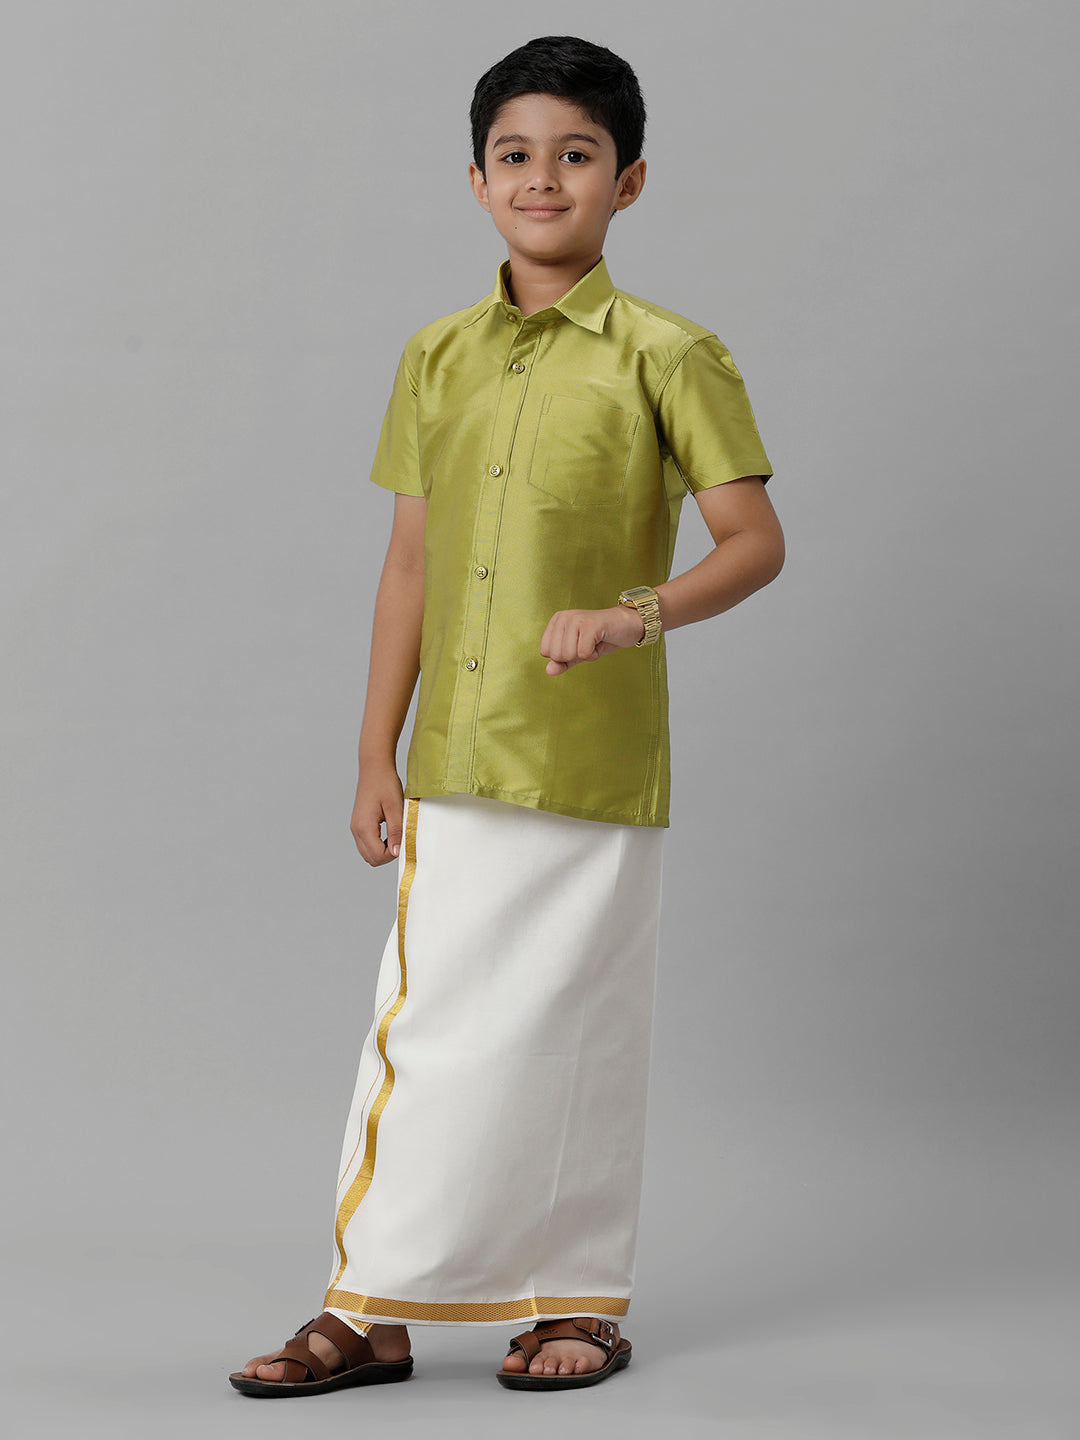 Boys Silk Cotton Lemon Green Half Sleeves Shirt with Adjustable Cream Dhoti Combo K44-Front view